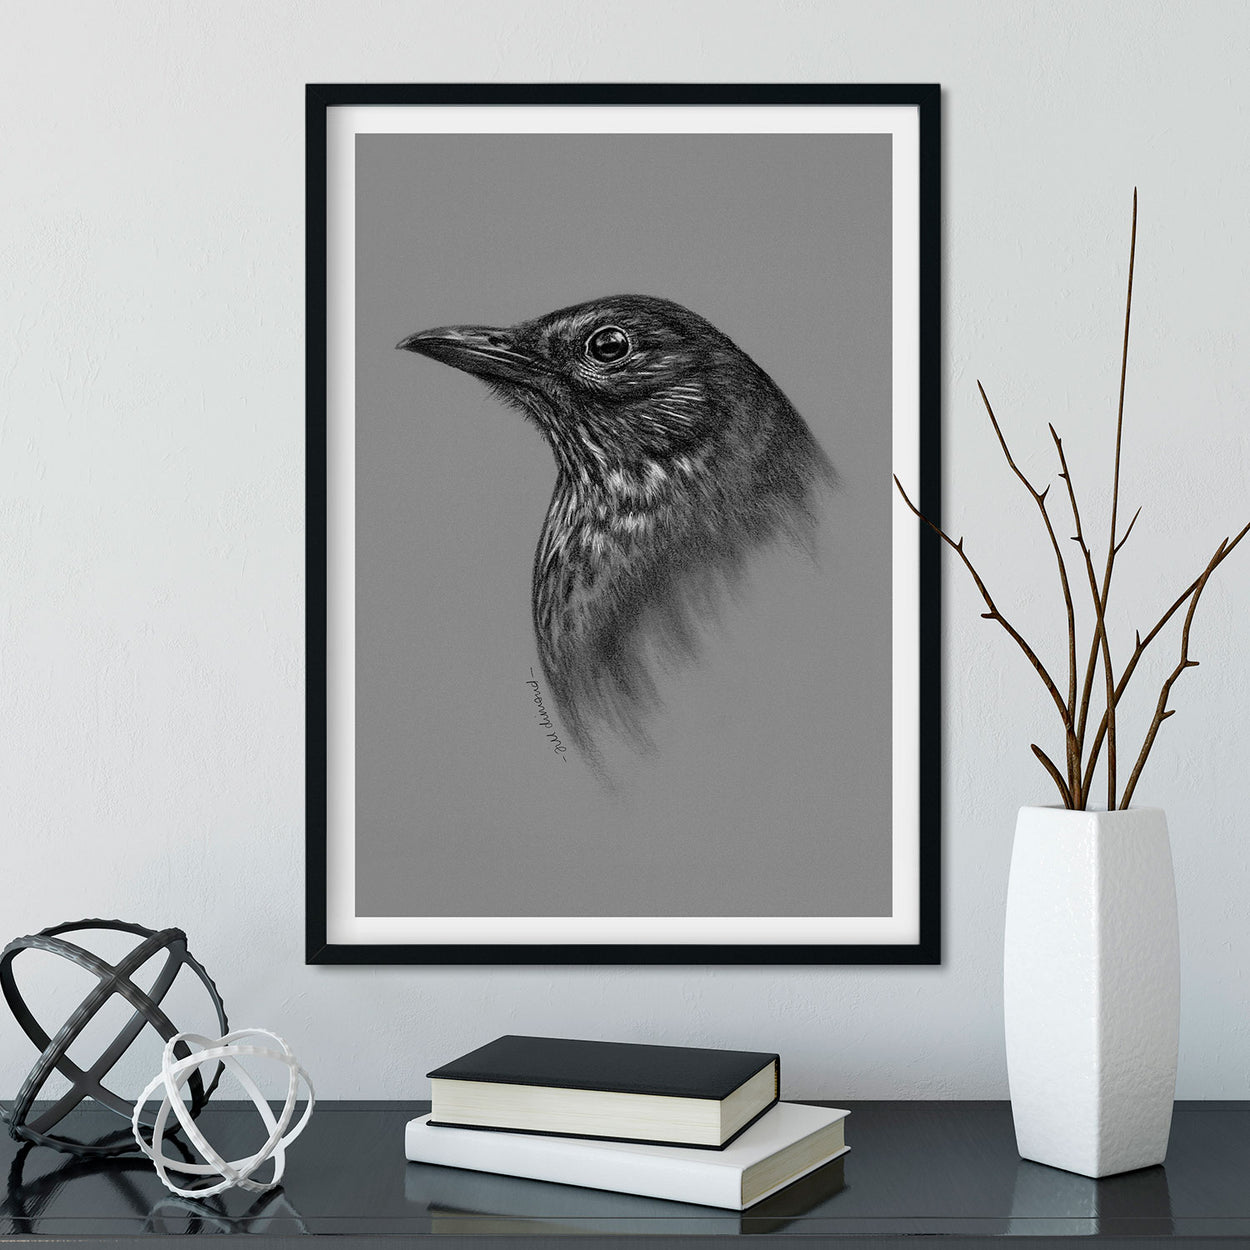 Blackbird Wall Art in Frame Garden Birds - The Thriving Wild